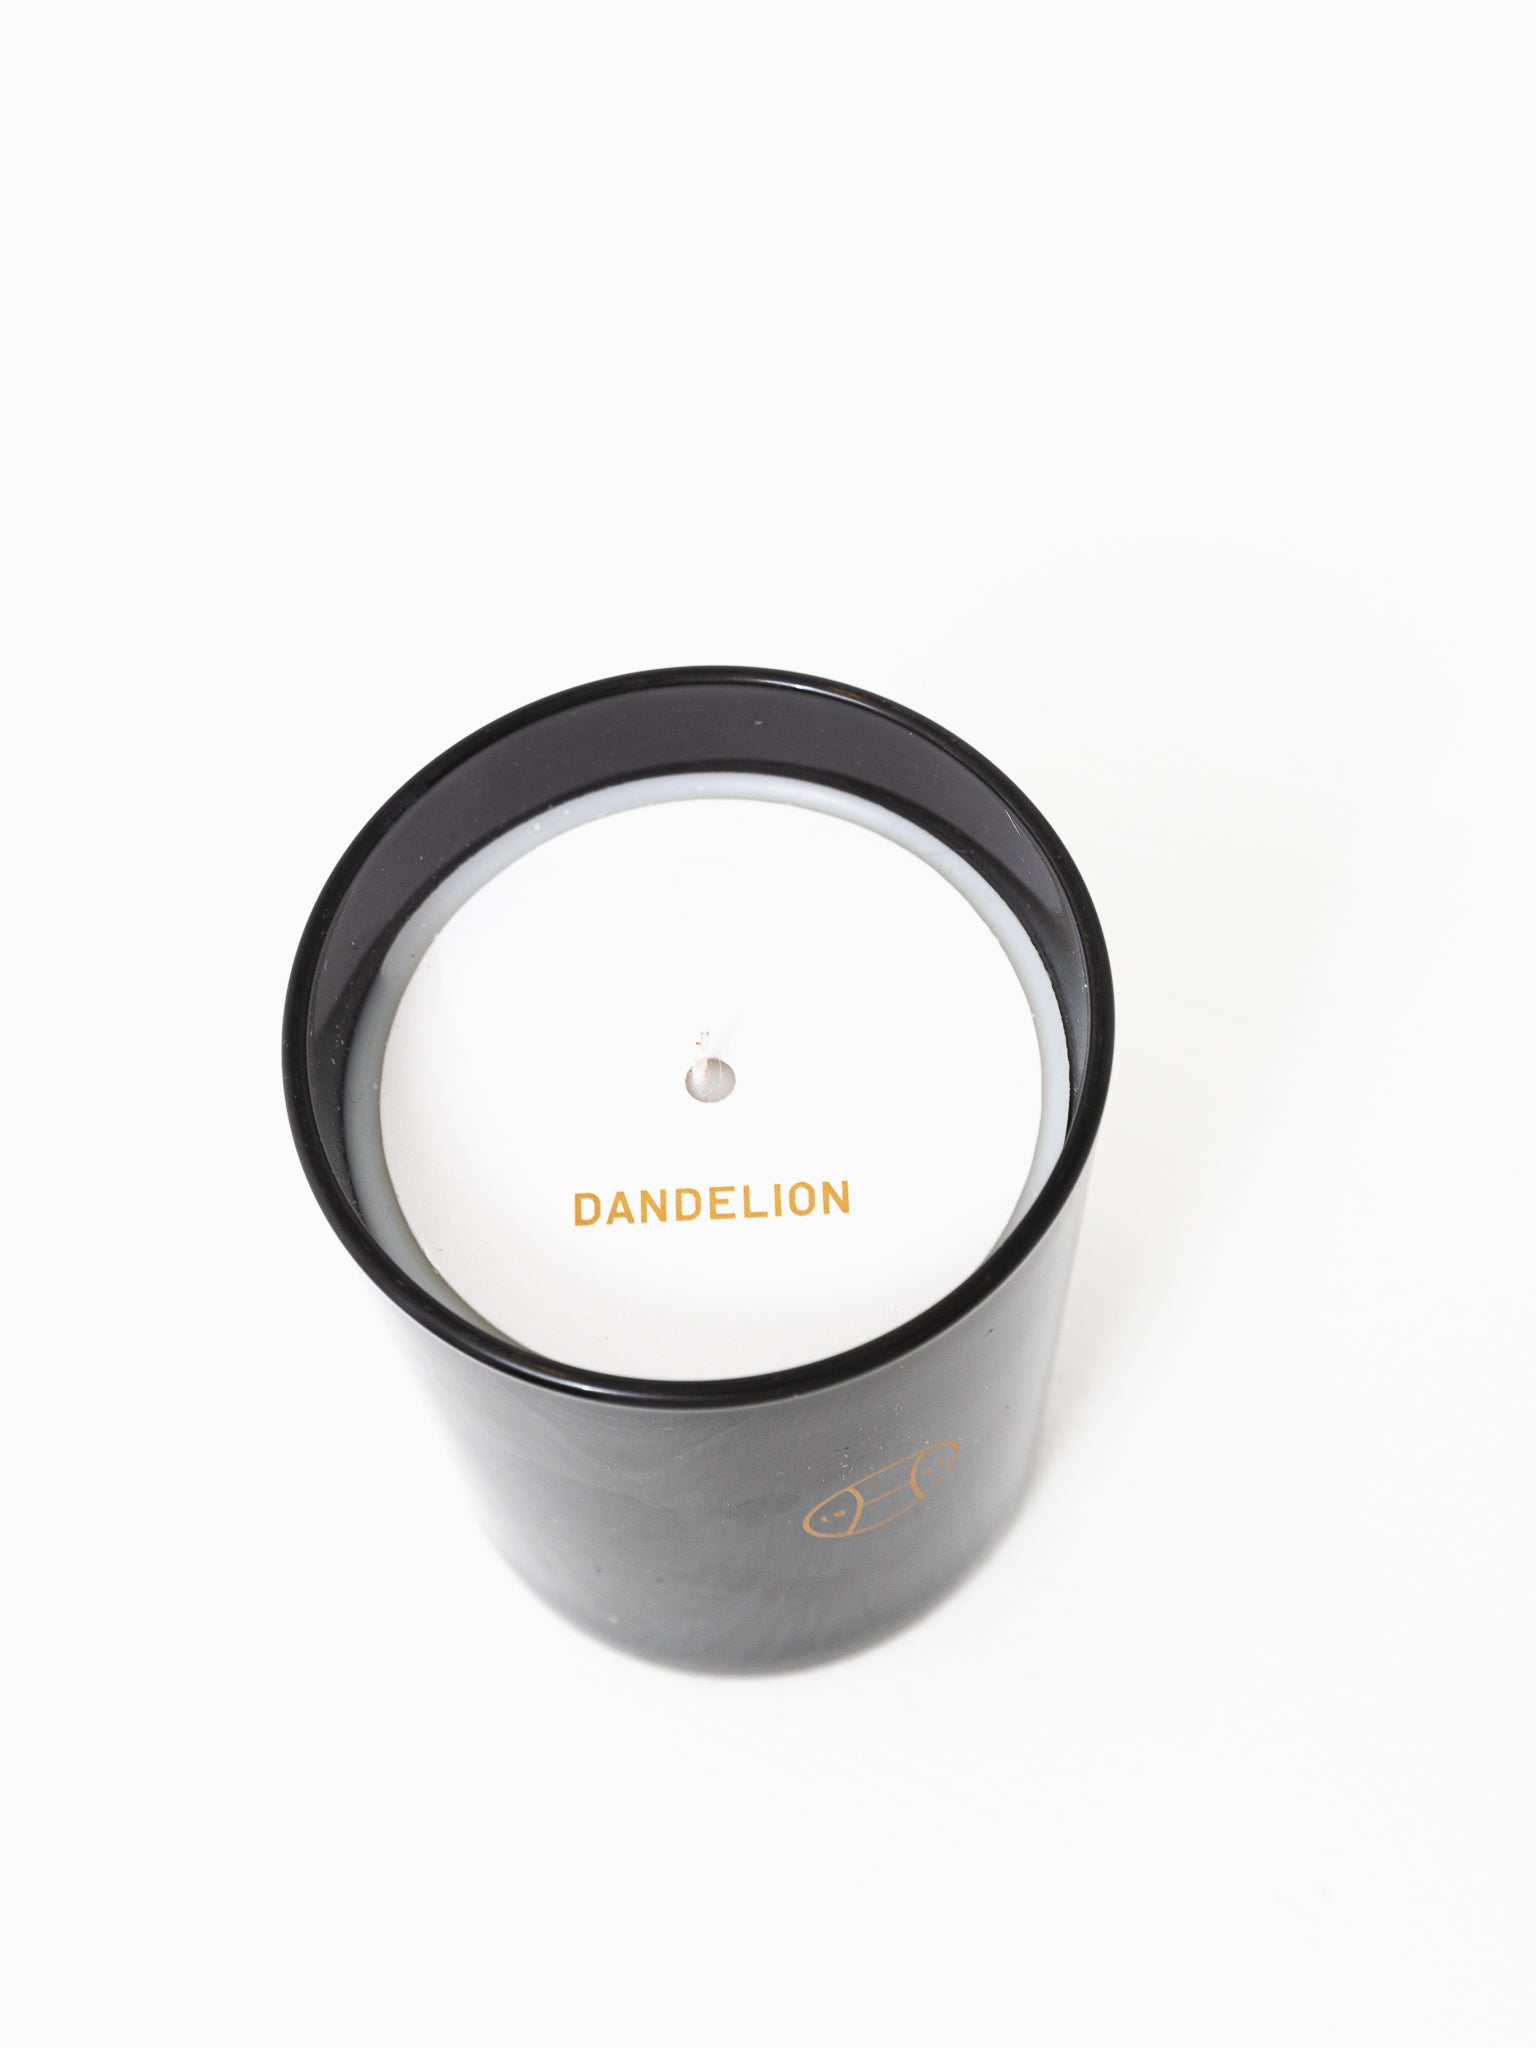 Perfumer H Dandelion Utility Candle - Worthwhile